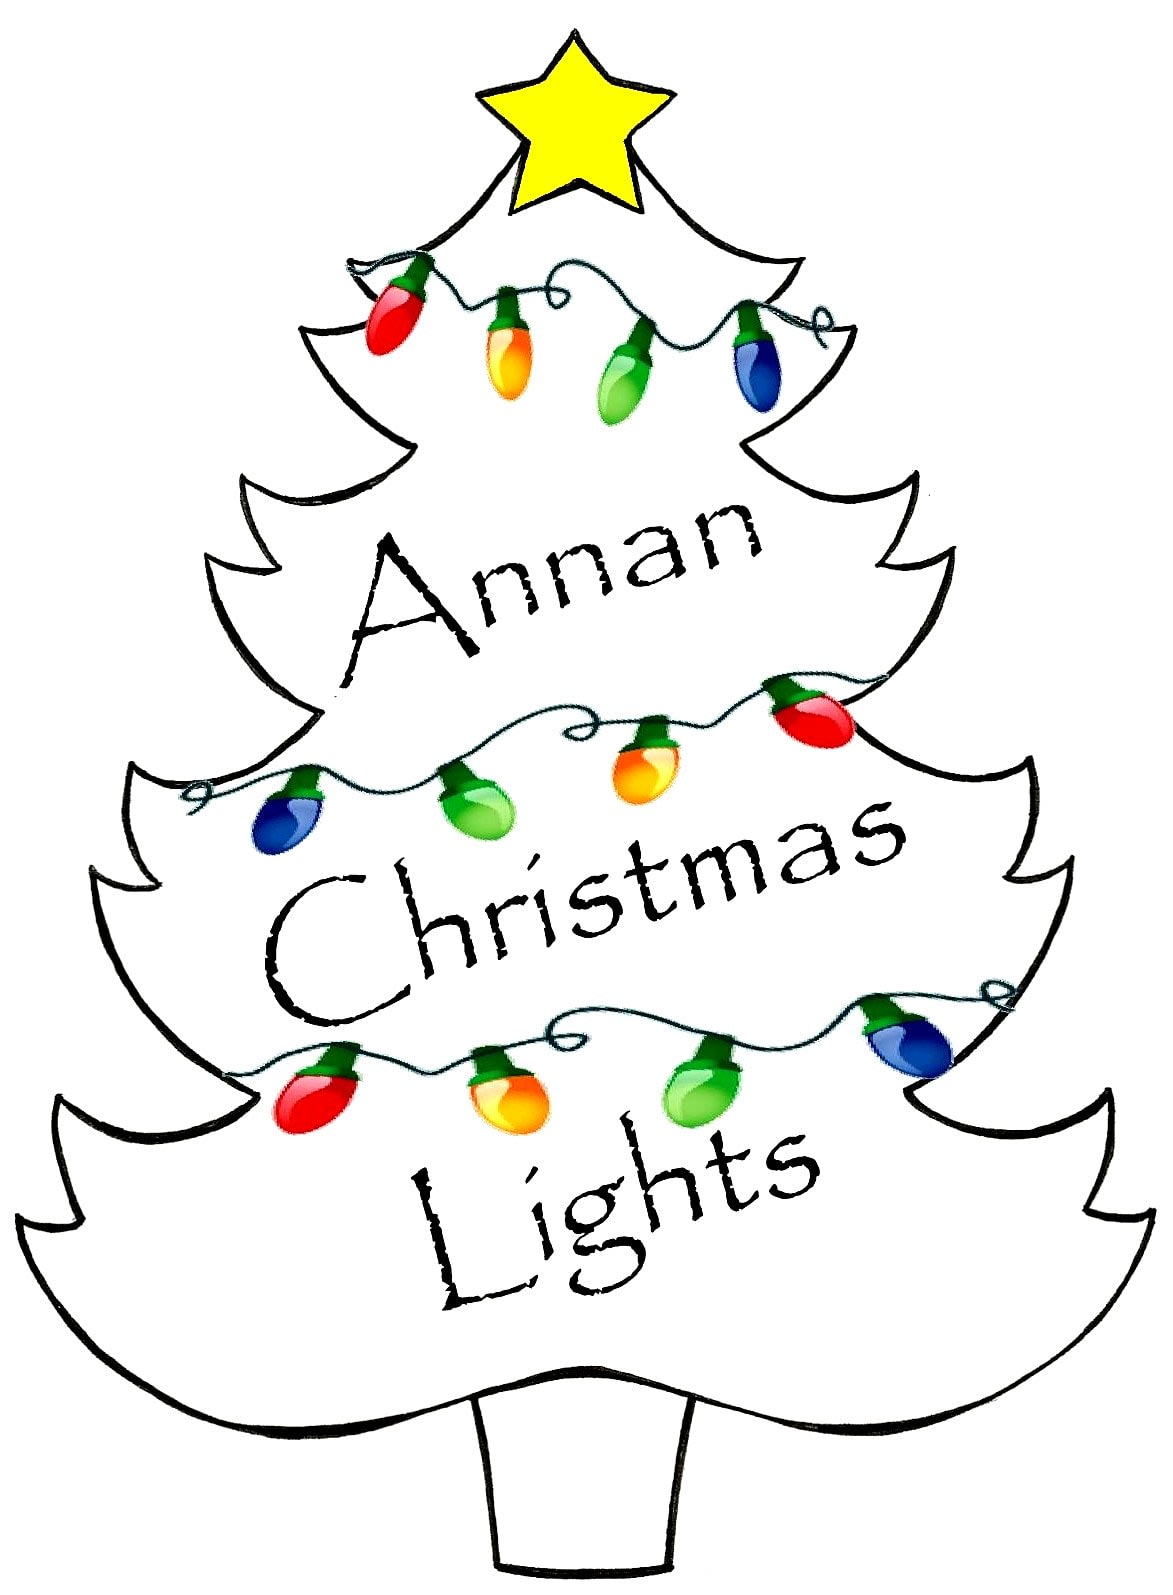 Annan Christmas Lights